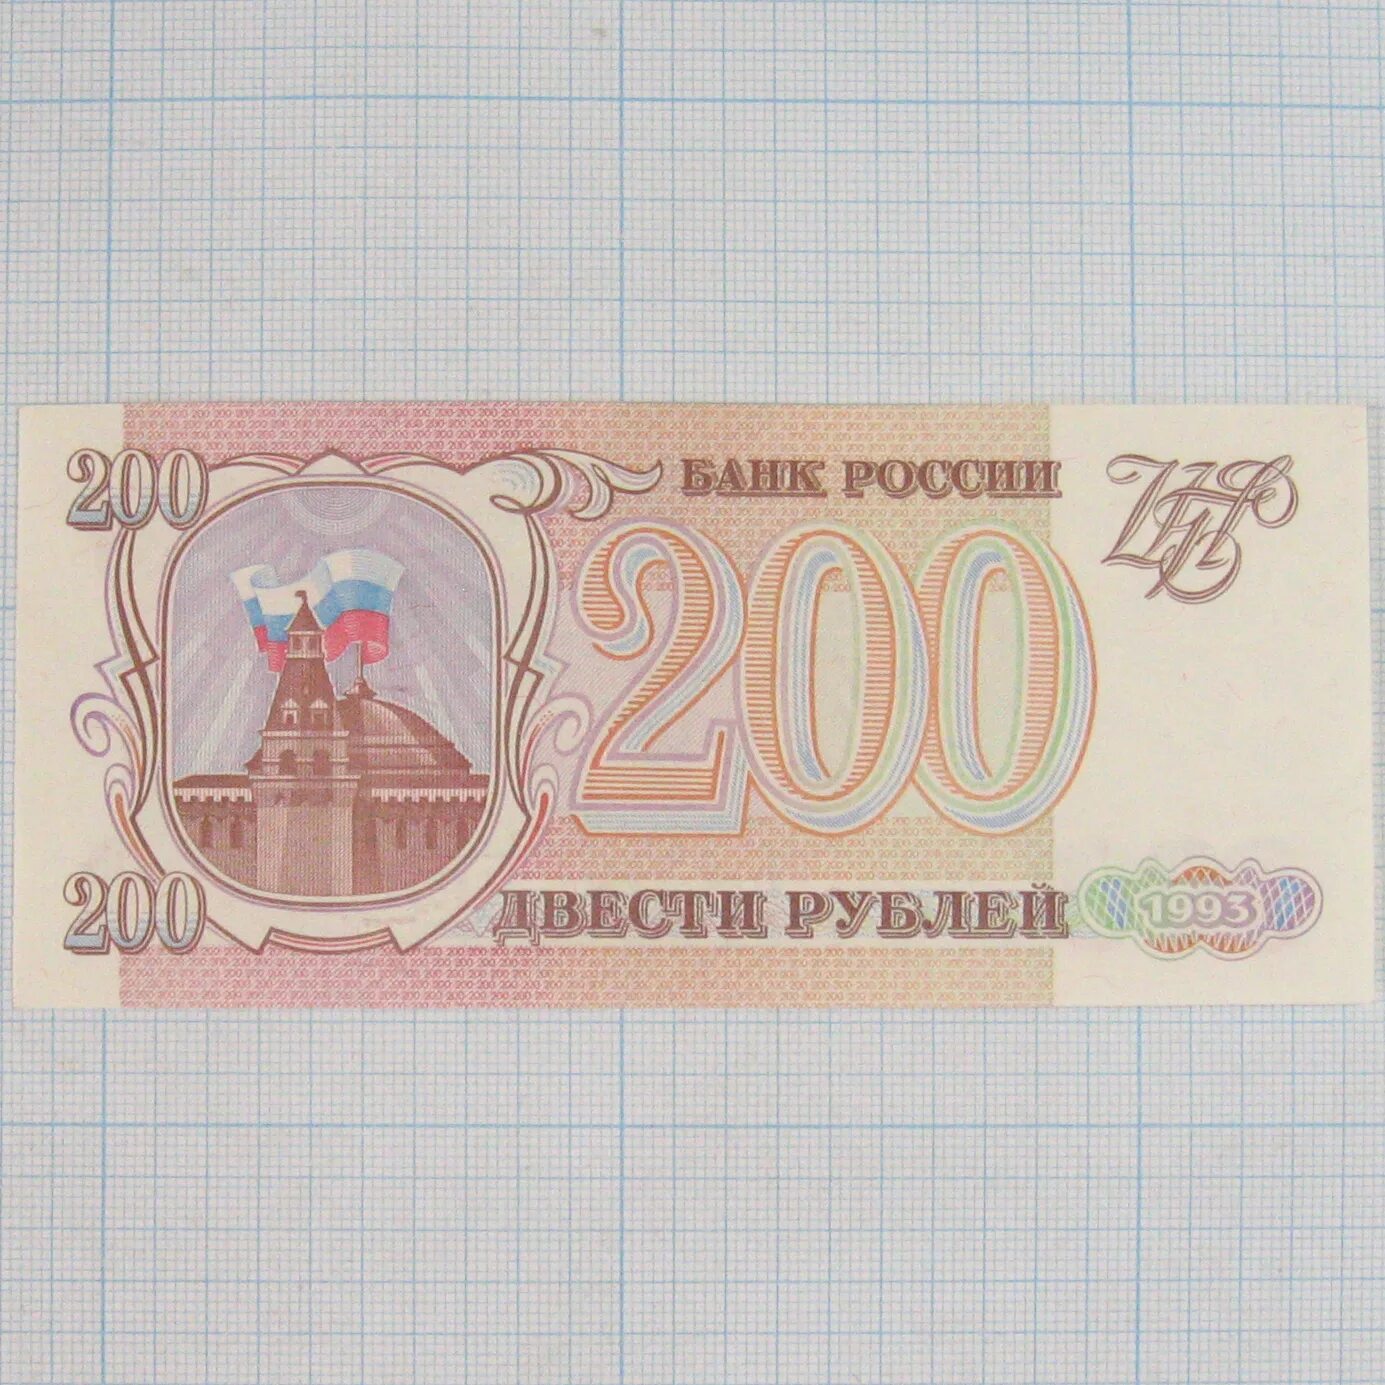 45 200 рублей. Банкнота 200 рублей 1993. Банкнота 200 рублей 1993 пресс. Купюра 200 рублей 1993. Двести рублей 1993.